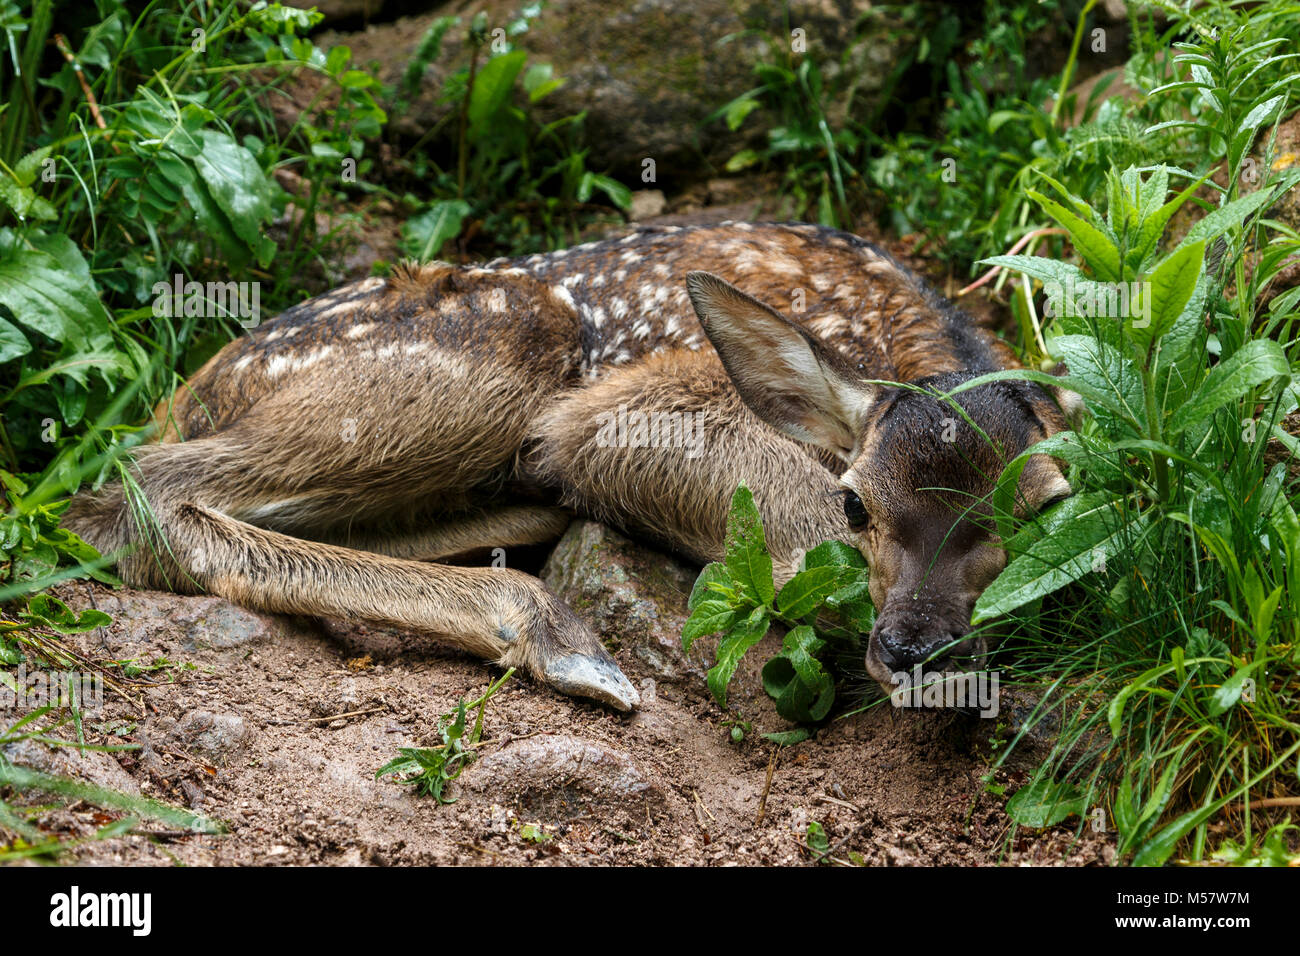 La molla closeup di un culbianco Deer Fawn bedded giù in un habitat boschivo, Foto Stock